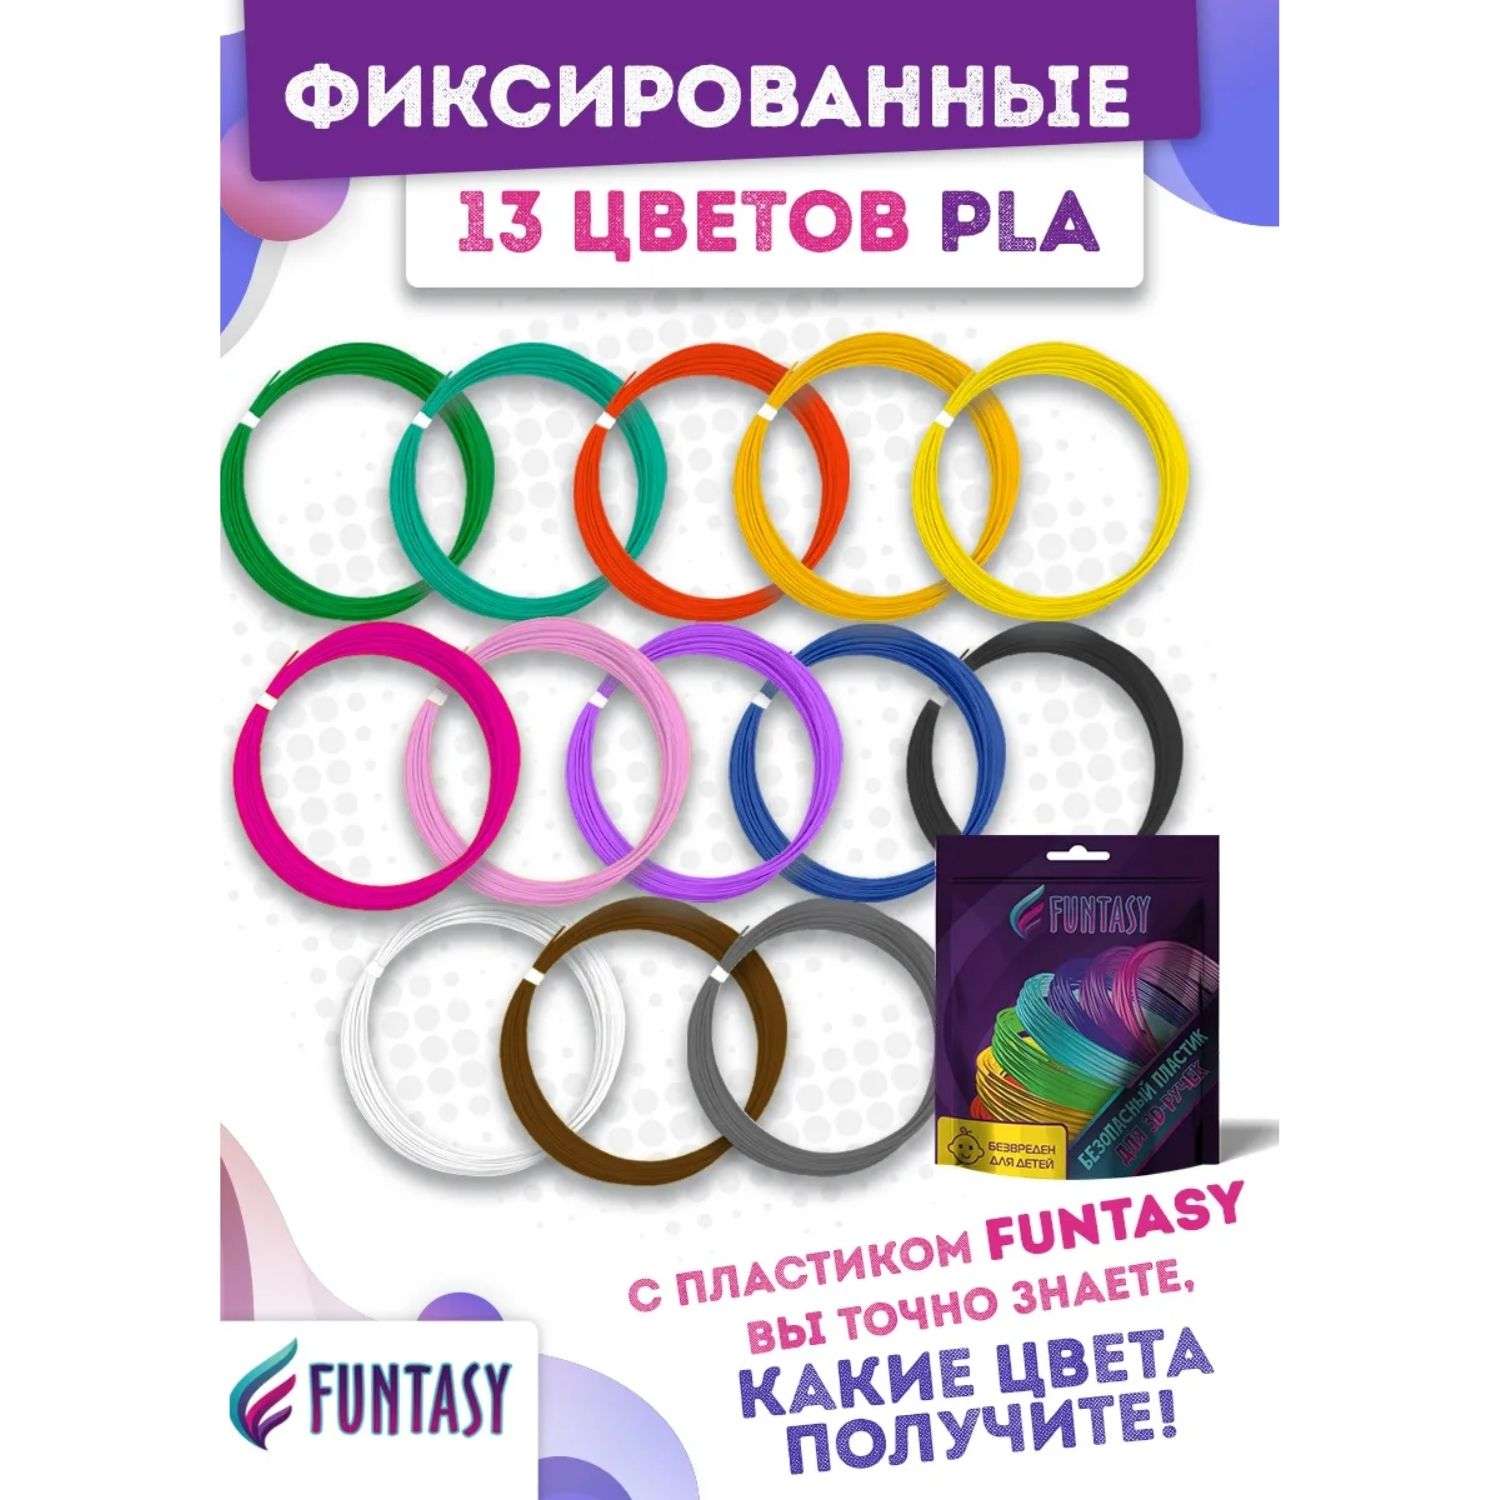 Пластик PLA для 3d ручки Funtasy 13 цветов по 10 метров - фото 2